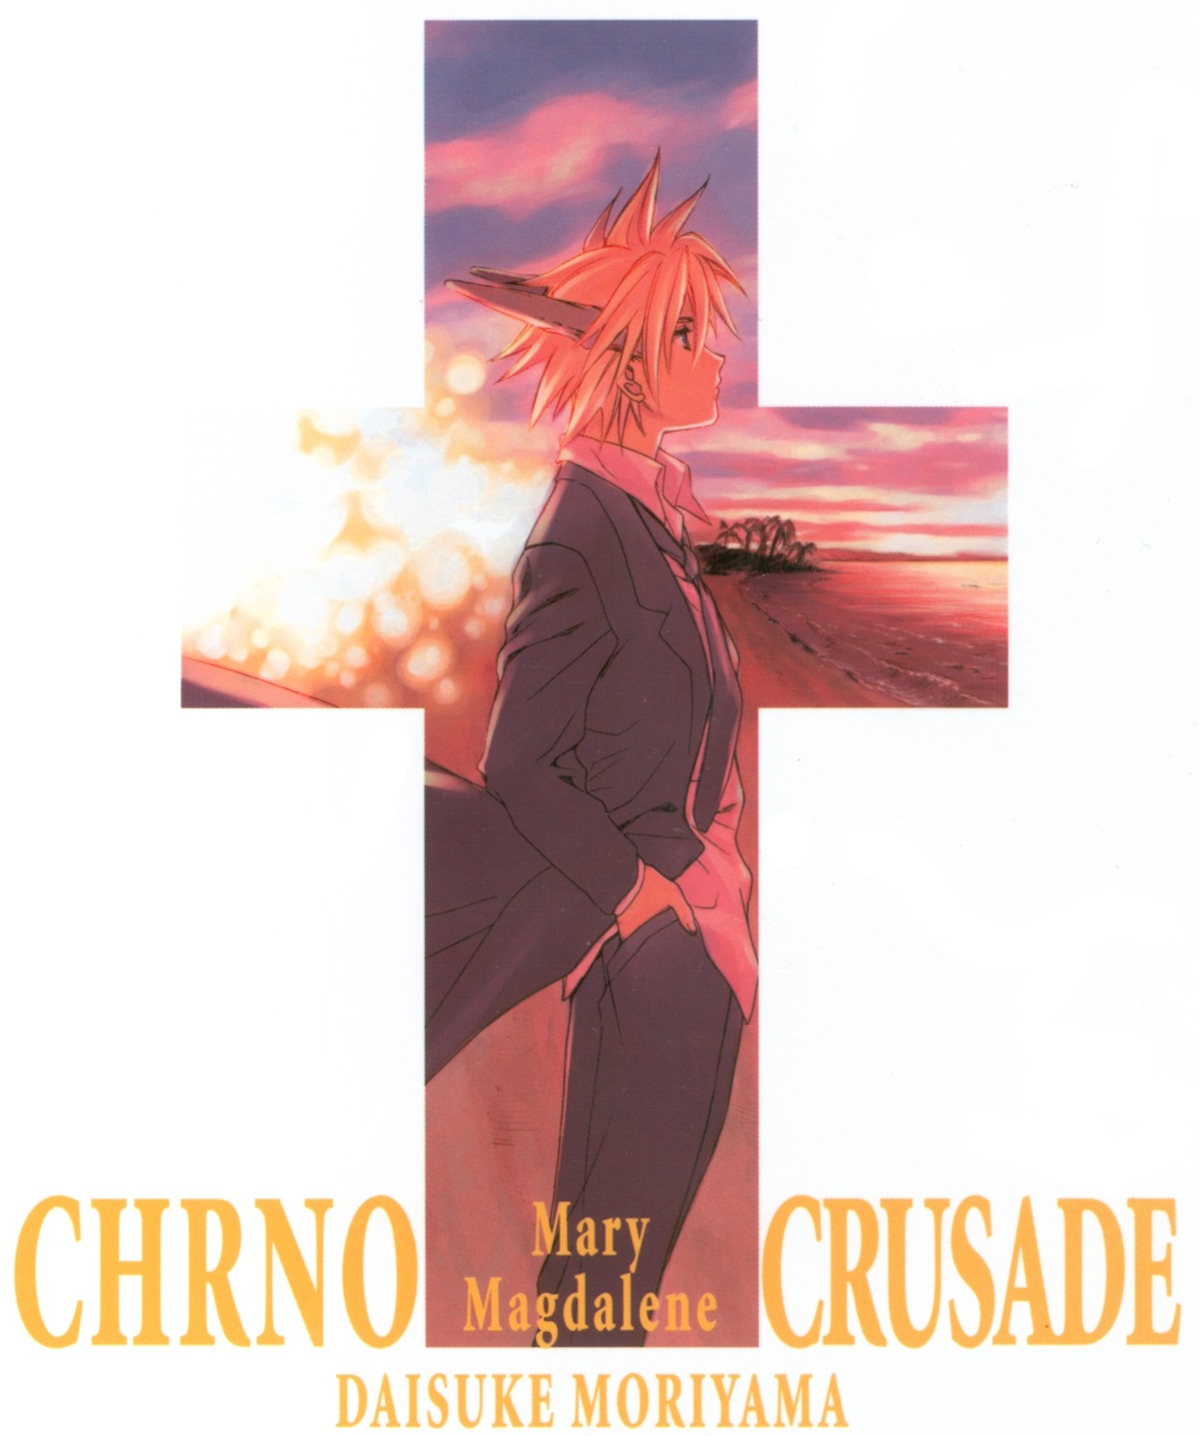 chrno_crusade joshua_christopher male moriyama_daisuke